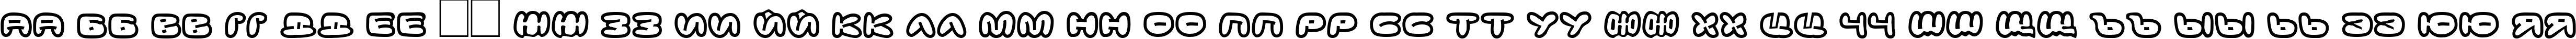 Пример написания русского алфавита шрифтом DS Down Cyr